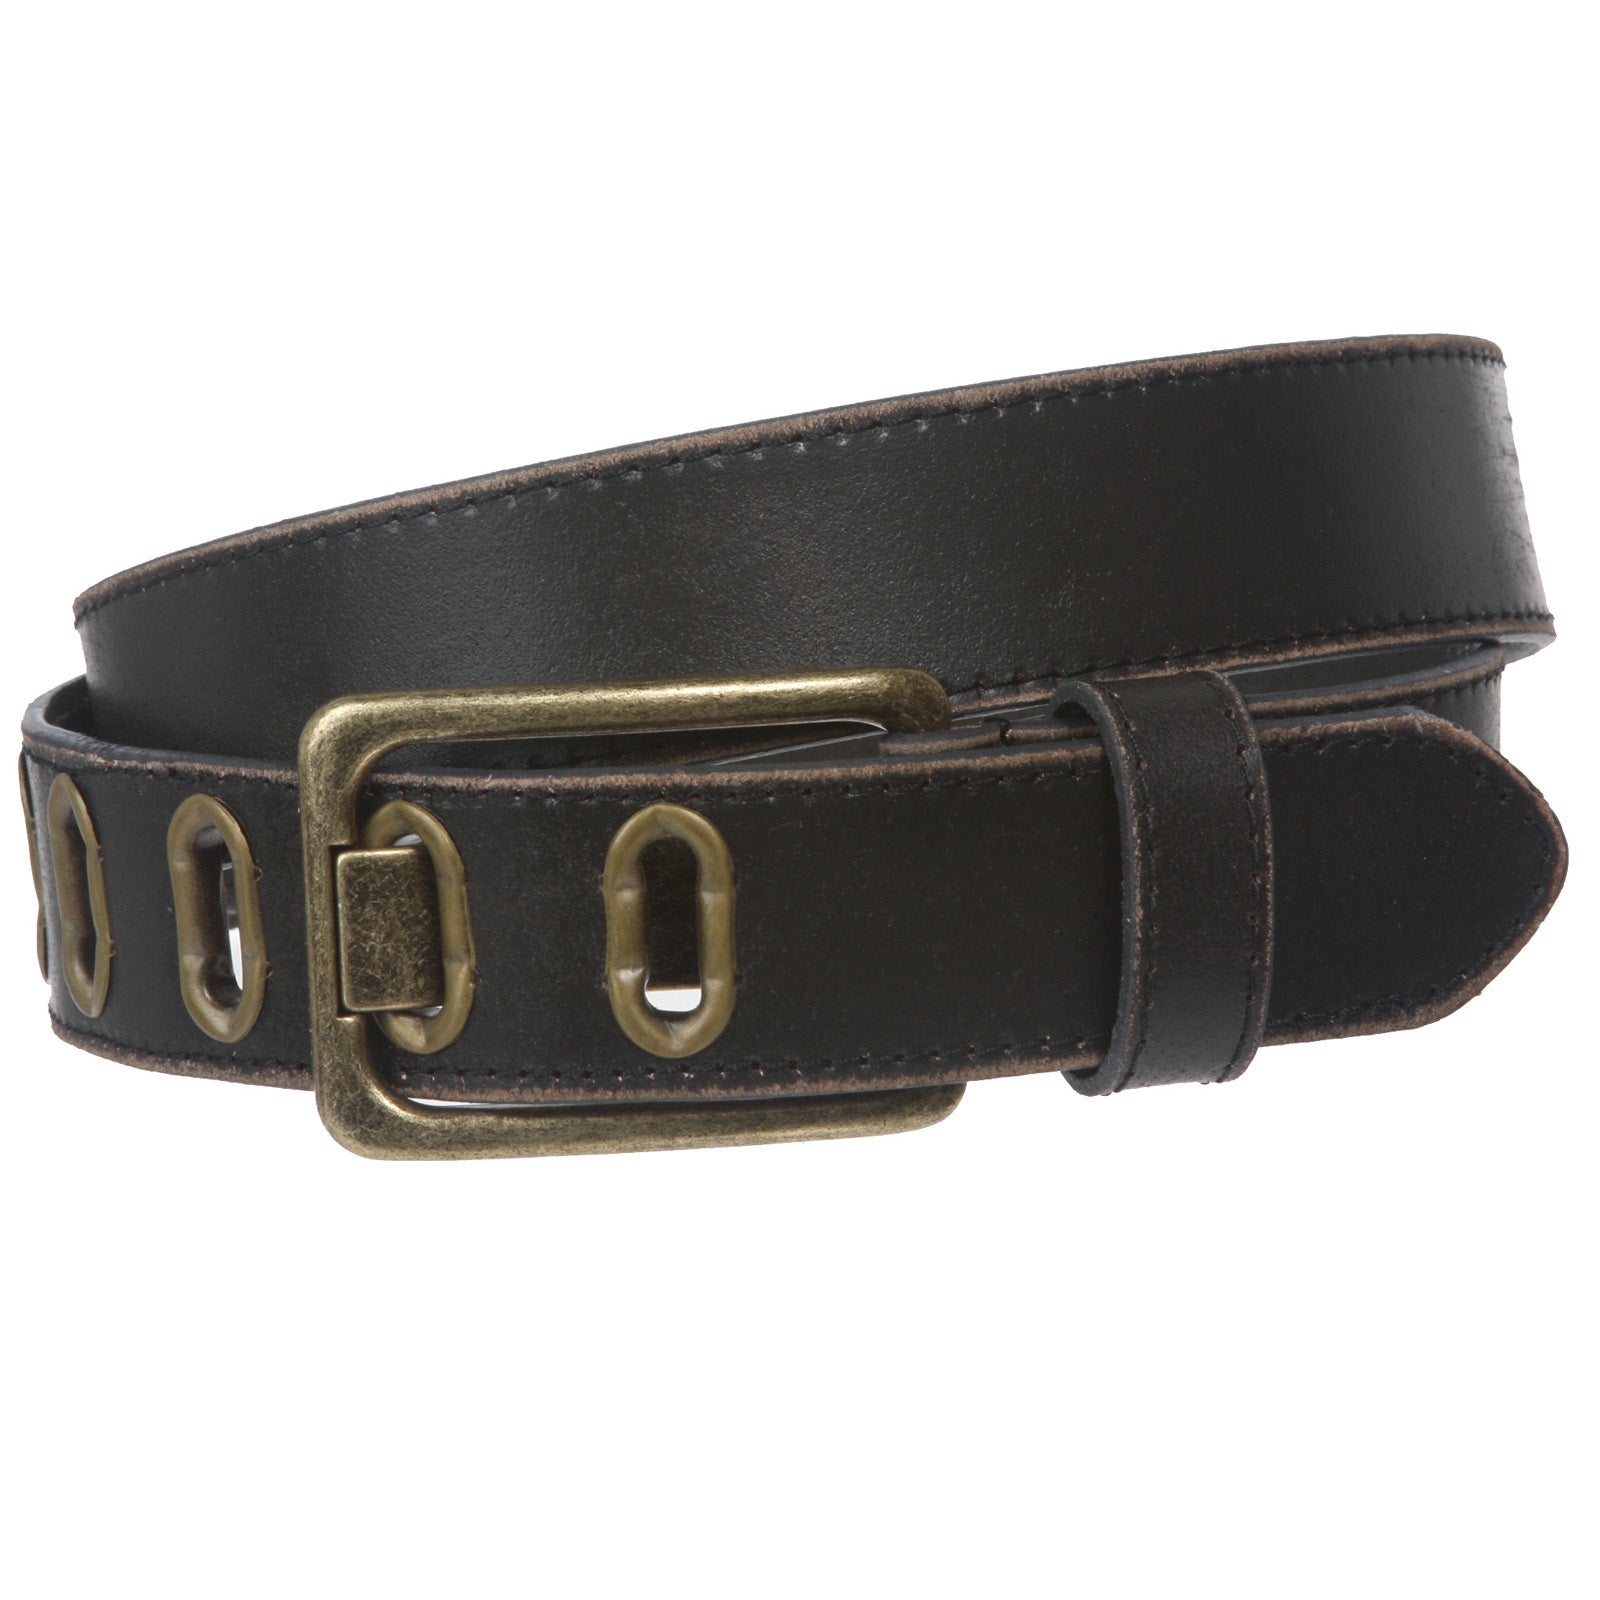 35 mm (1 3/8") Vintage Retro Stitching-Edged Distressed Solid Leather Belt